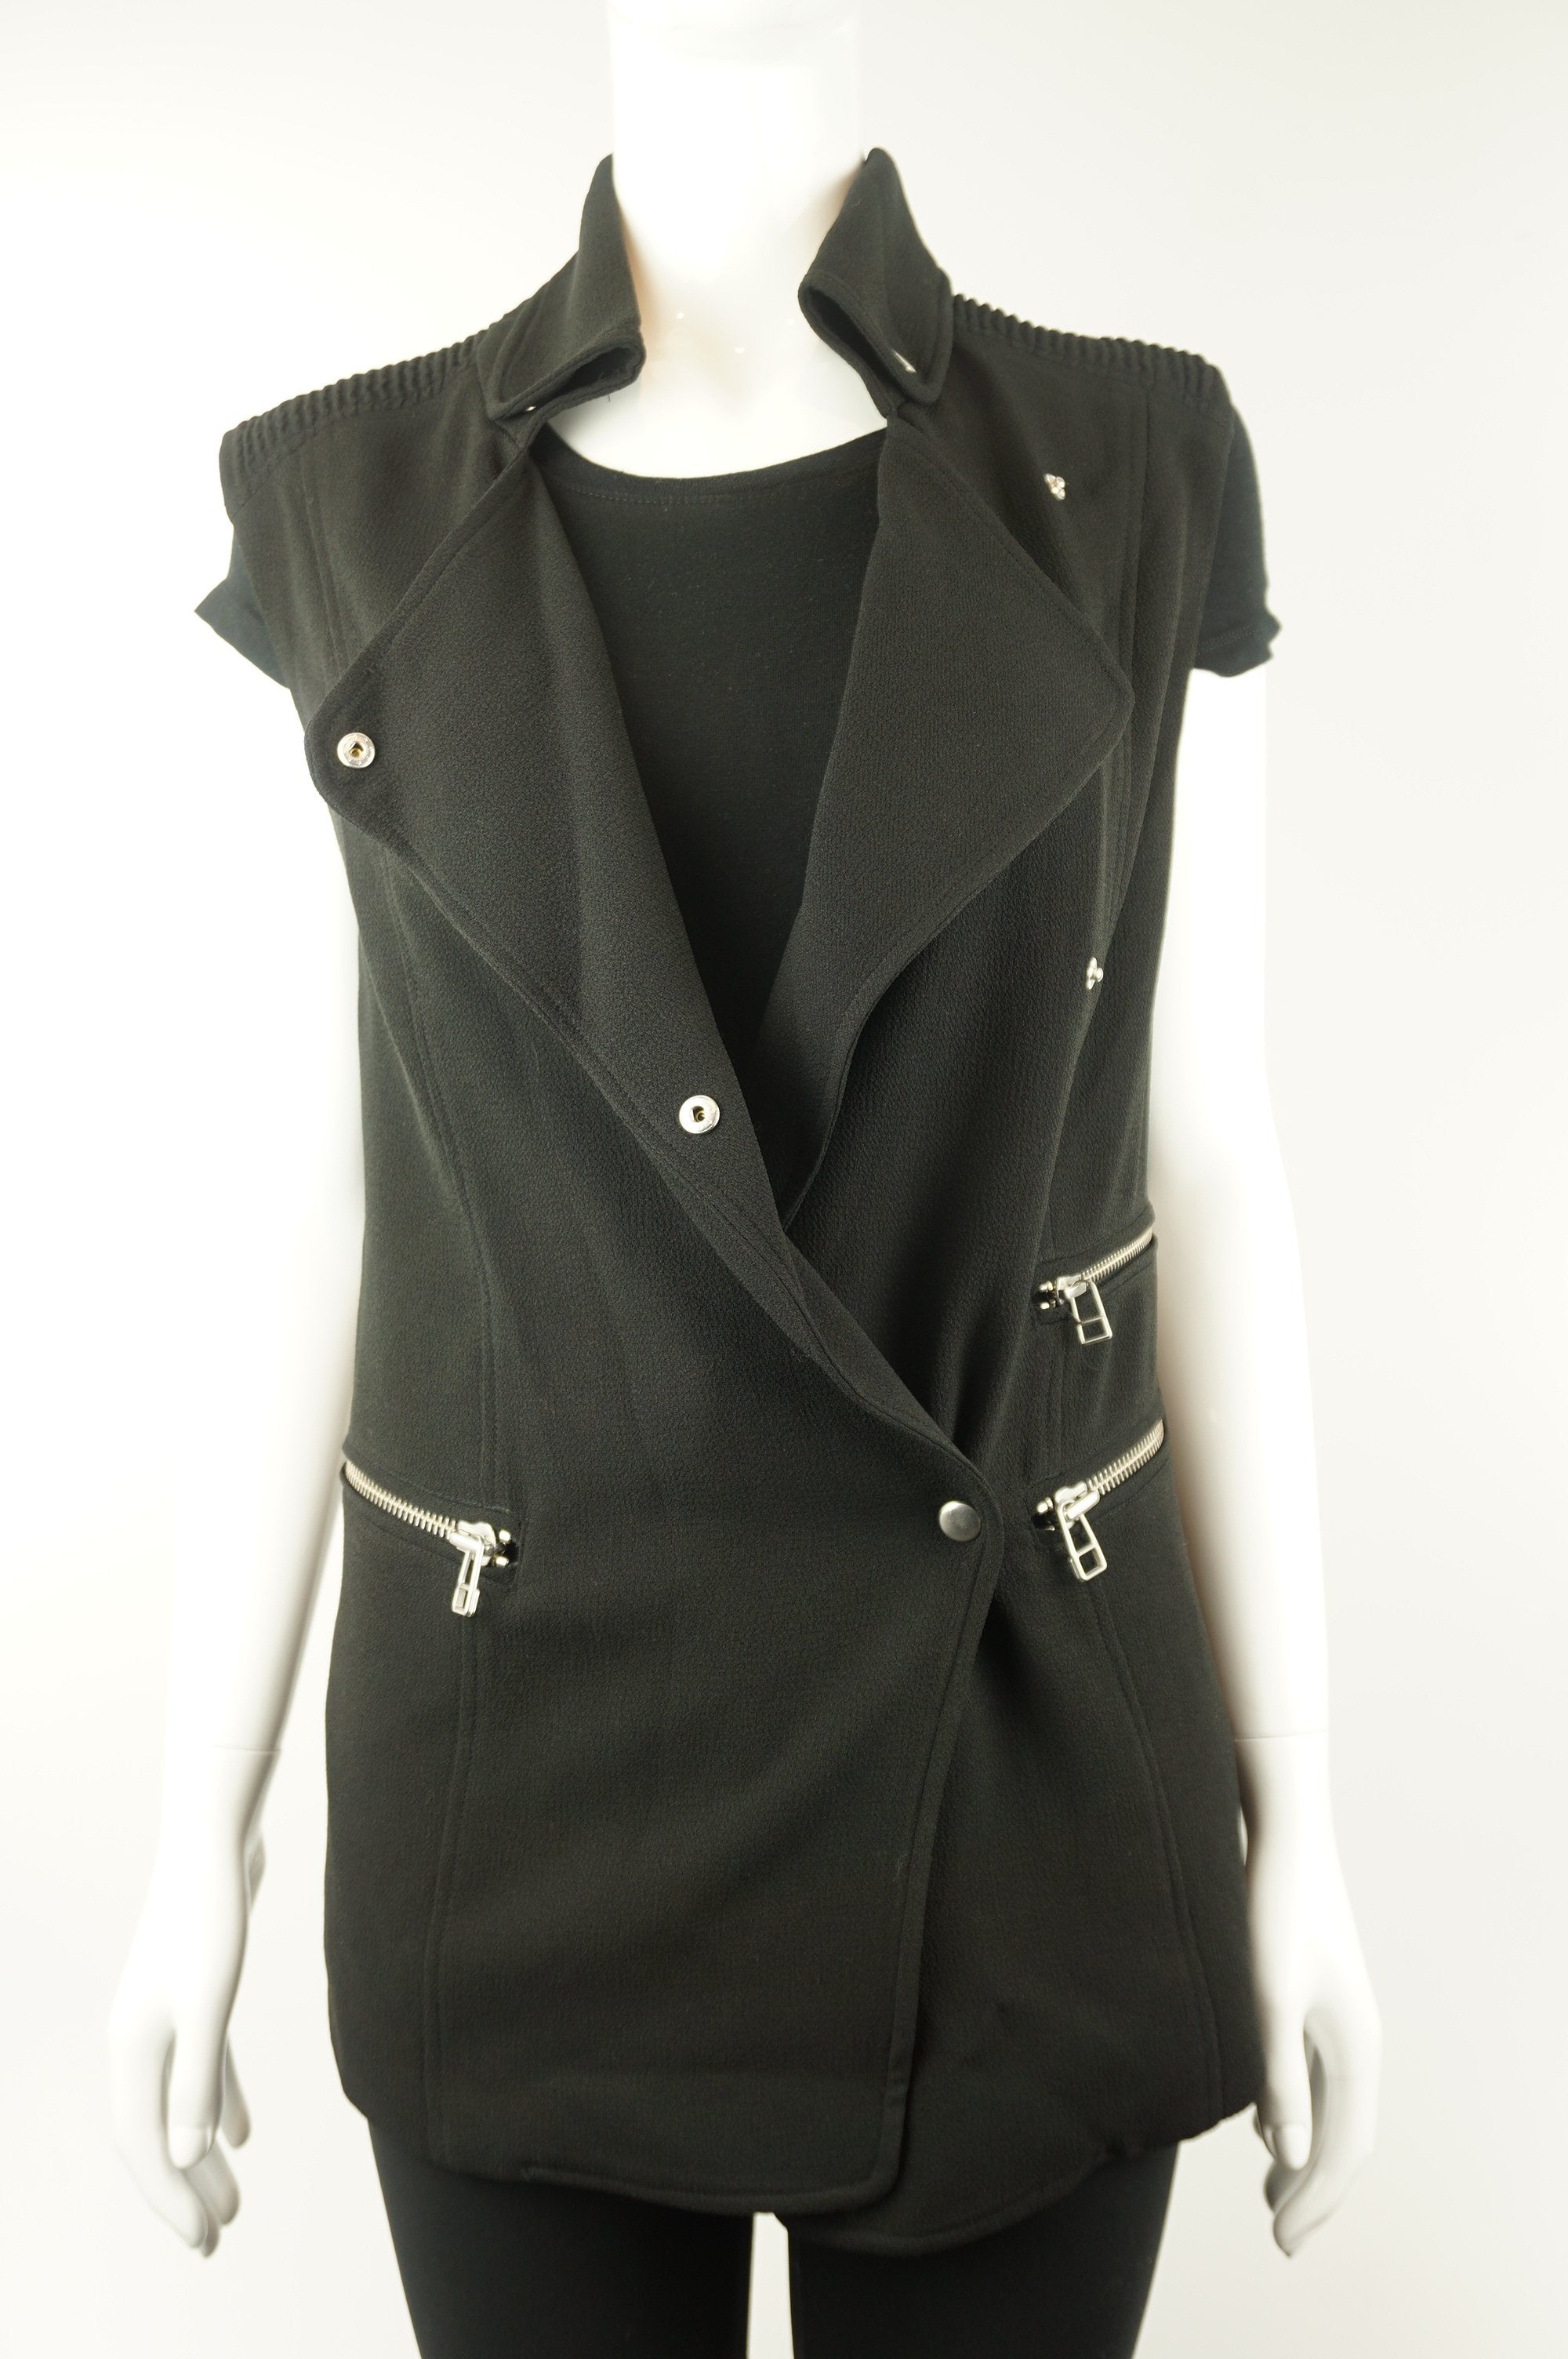 Wilfred Black Vest, Simple cute vest., Black, 68% acetate, 32% polyester, women's Jackets & Coats, women's Black Jackets & Coats, Wilfred women's Jackets & Coats, women's black vest, wilfred black vest, wilfred women's sleeveless vest jacket, wilfred women's sleeveless duster blazer vest jacket